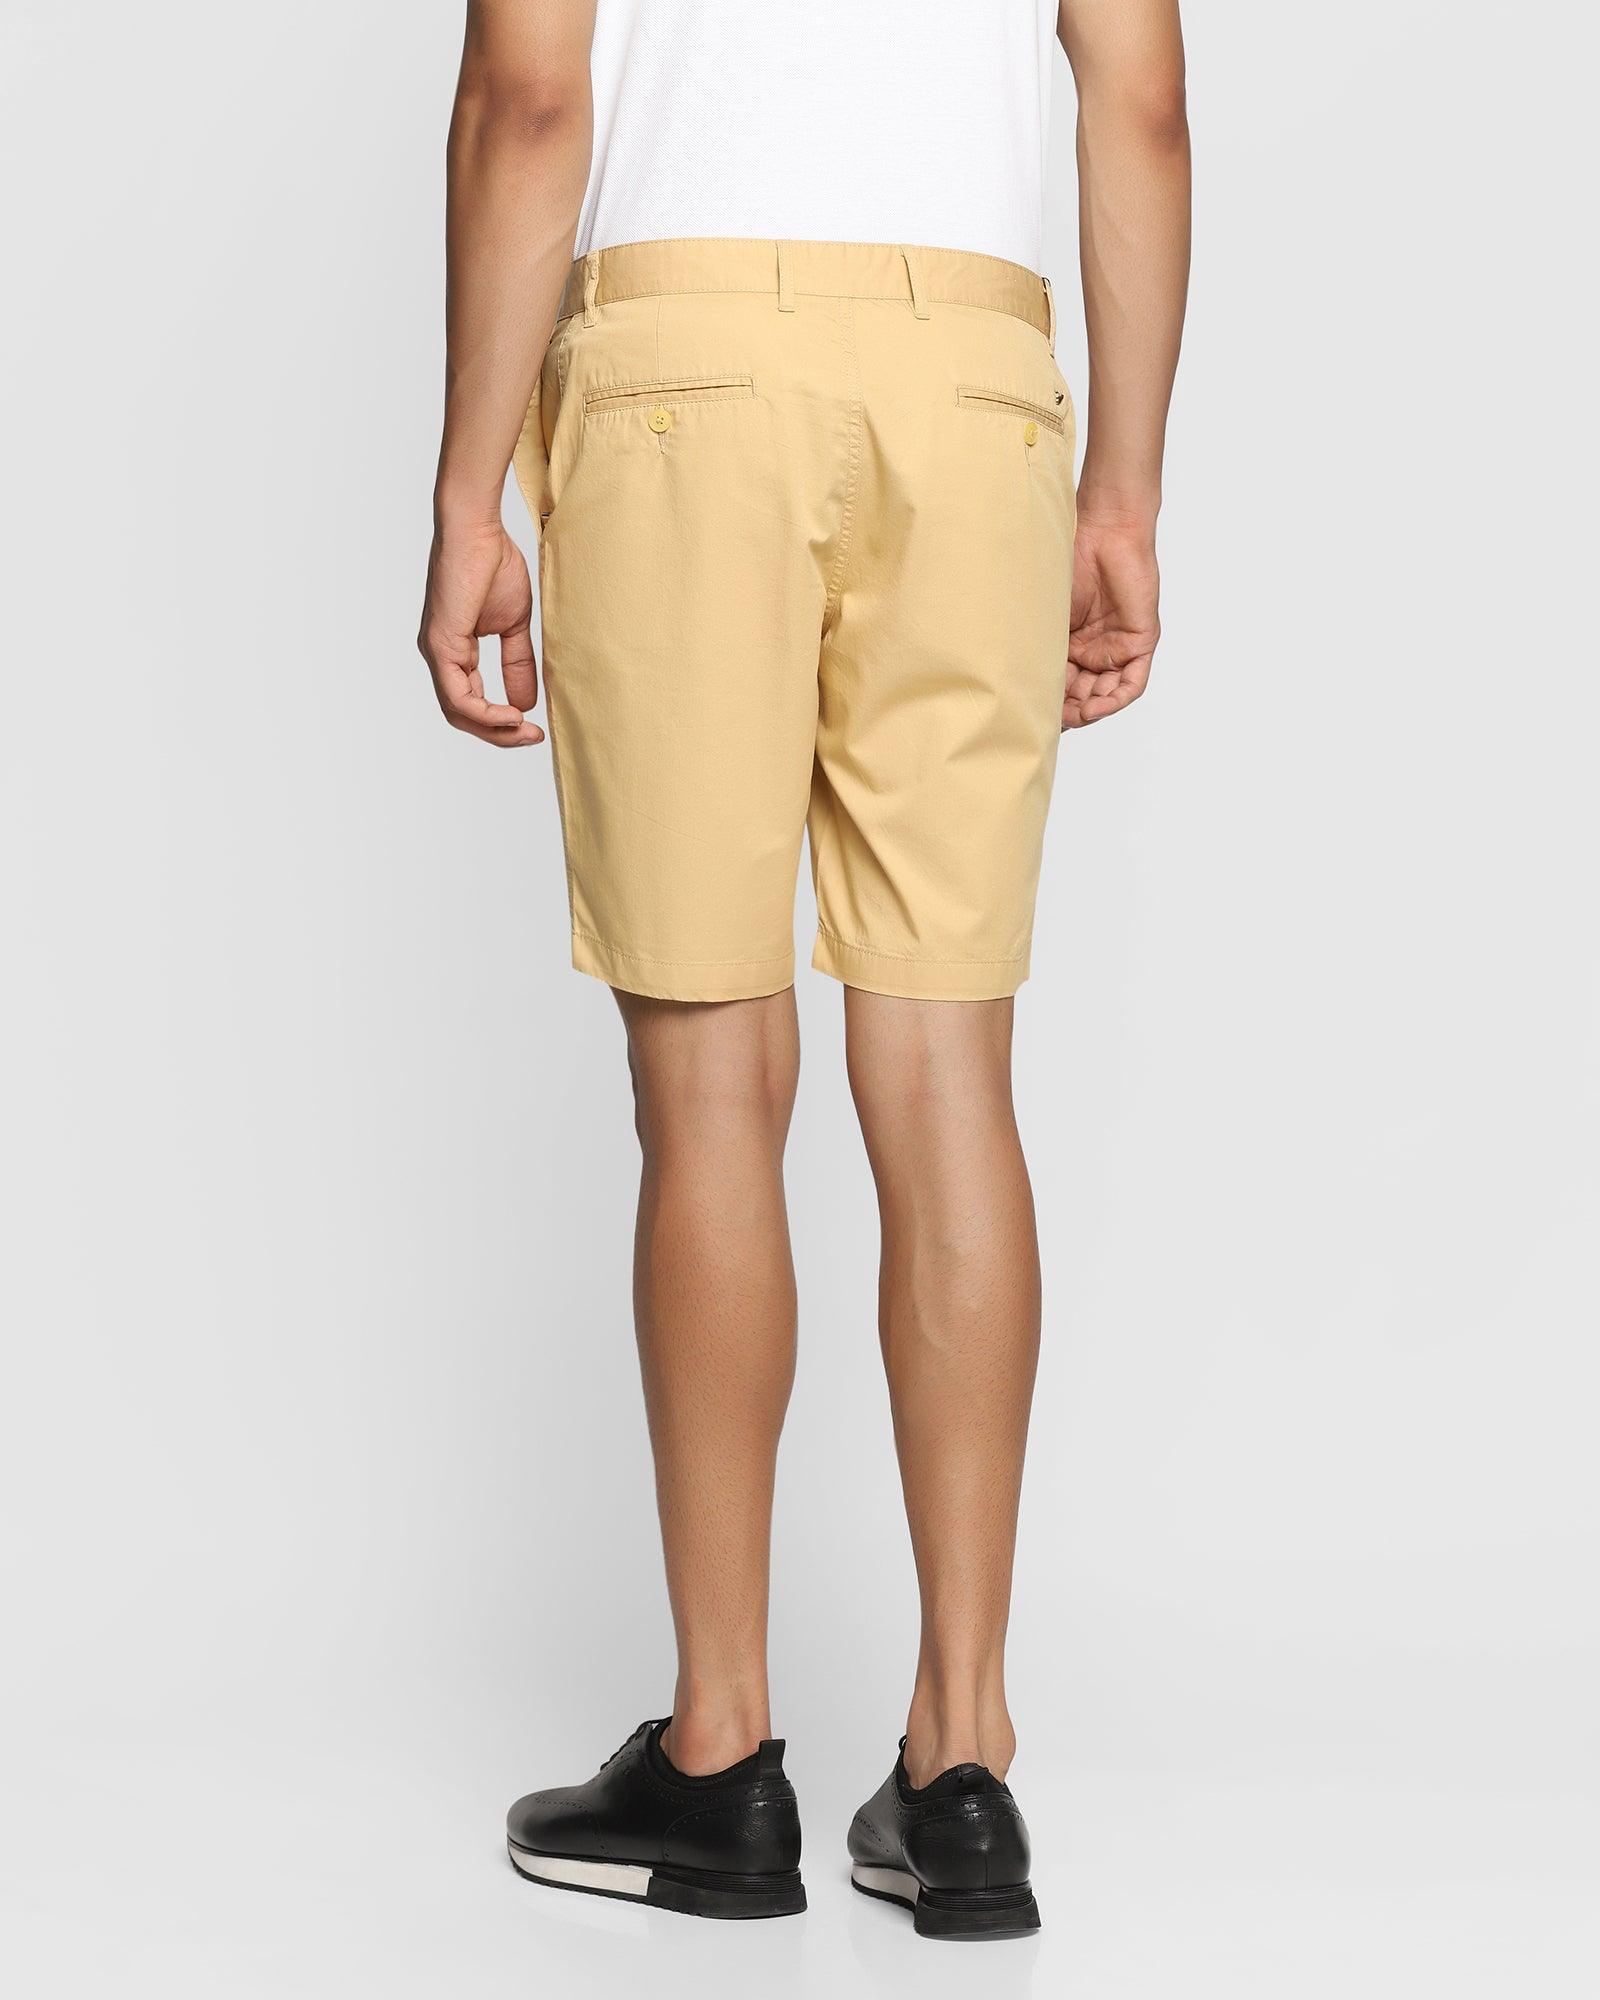 Casual Mustard Solid Shorts - Sam